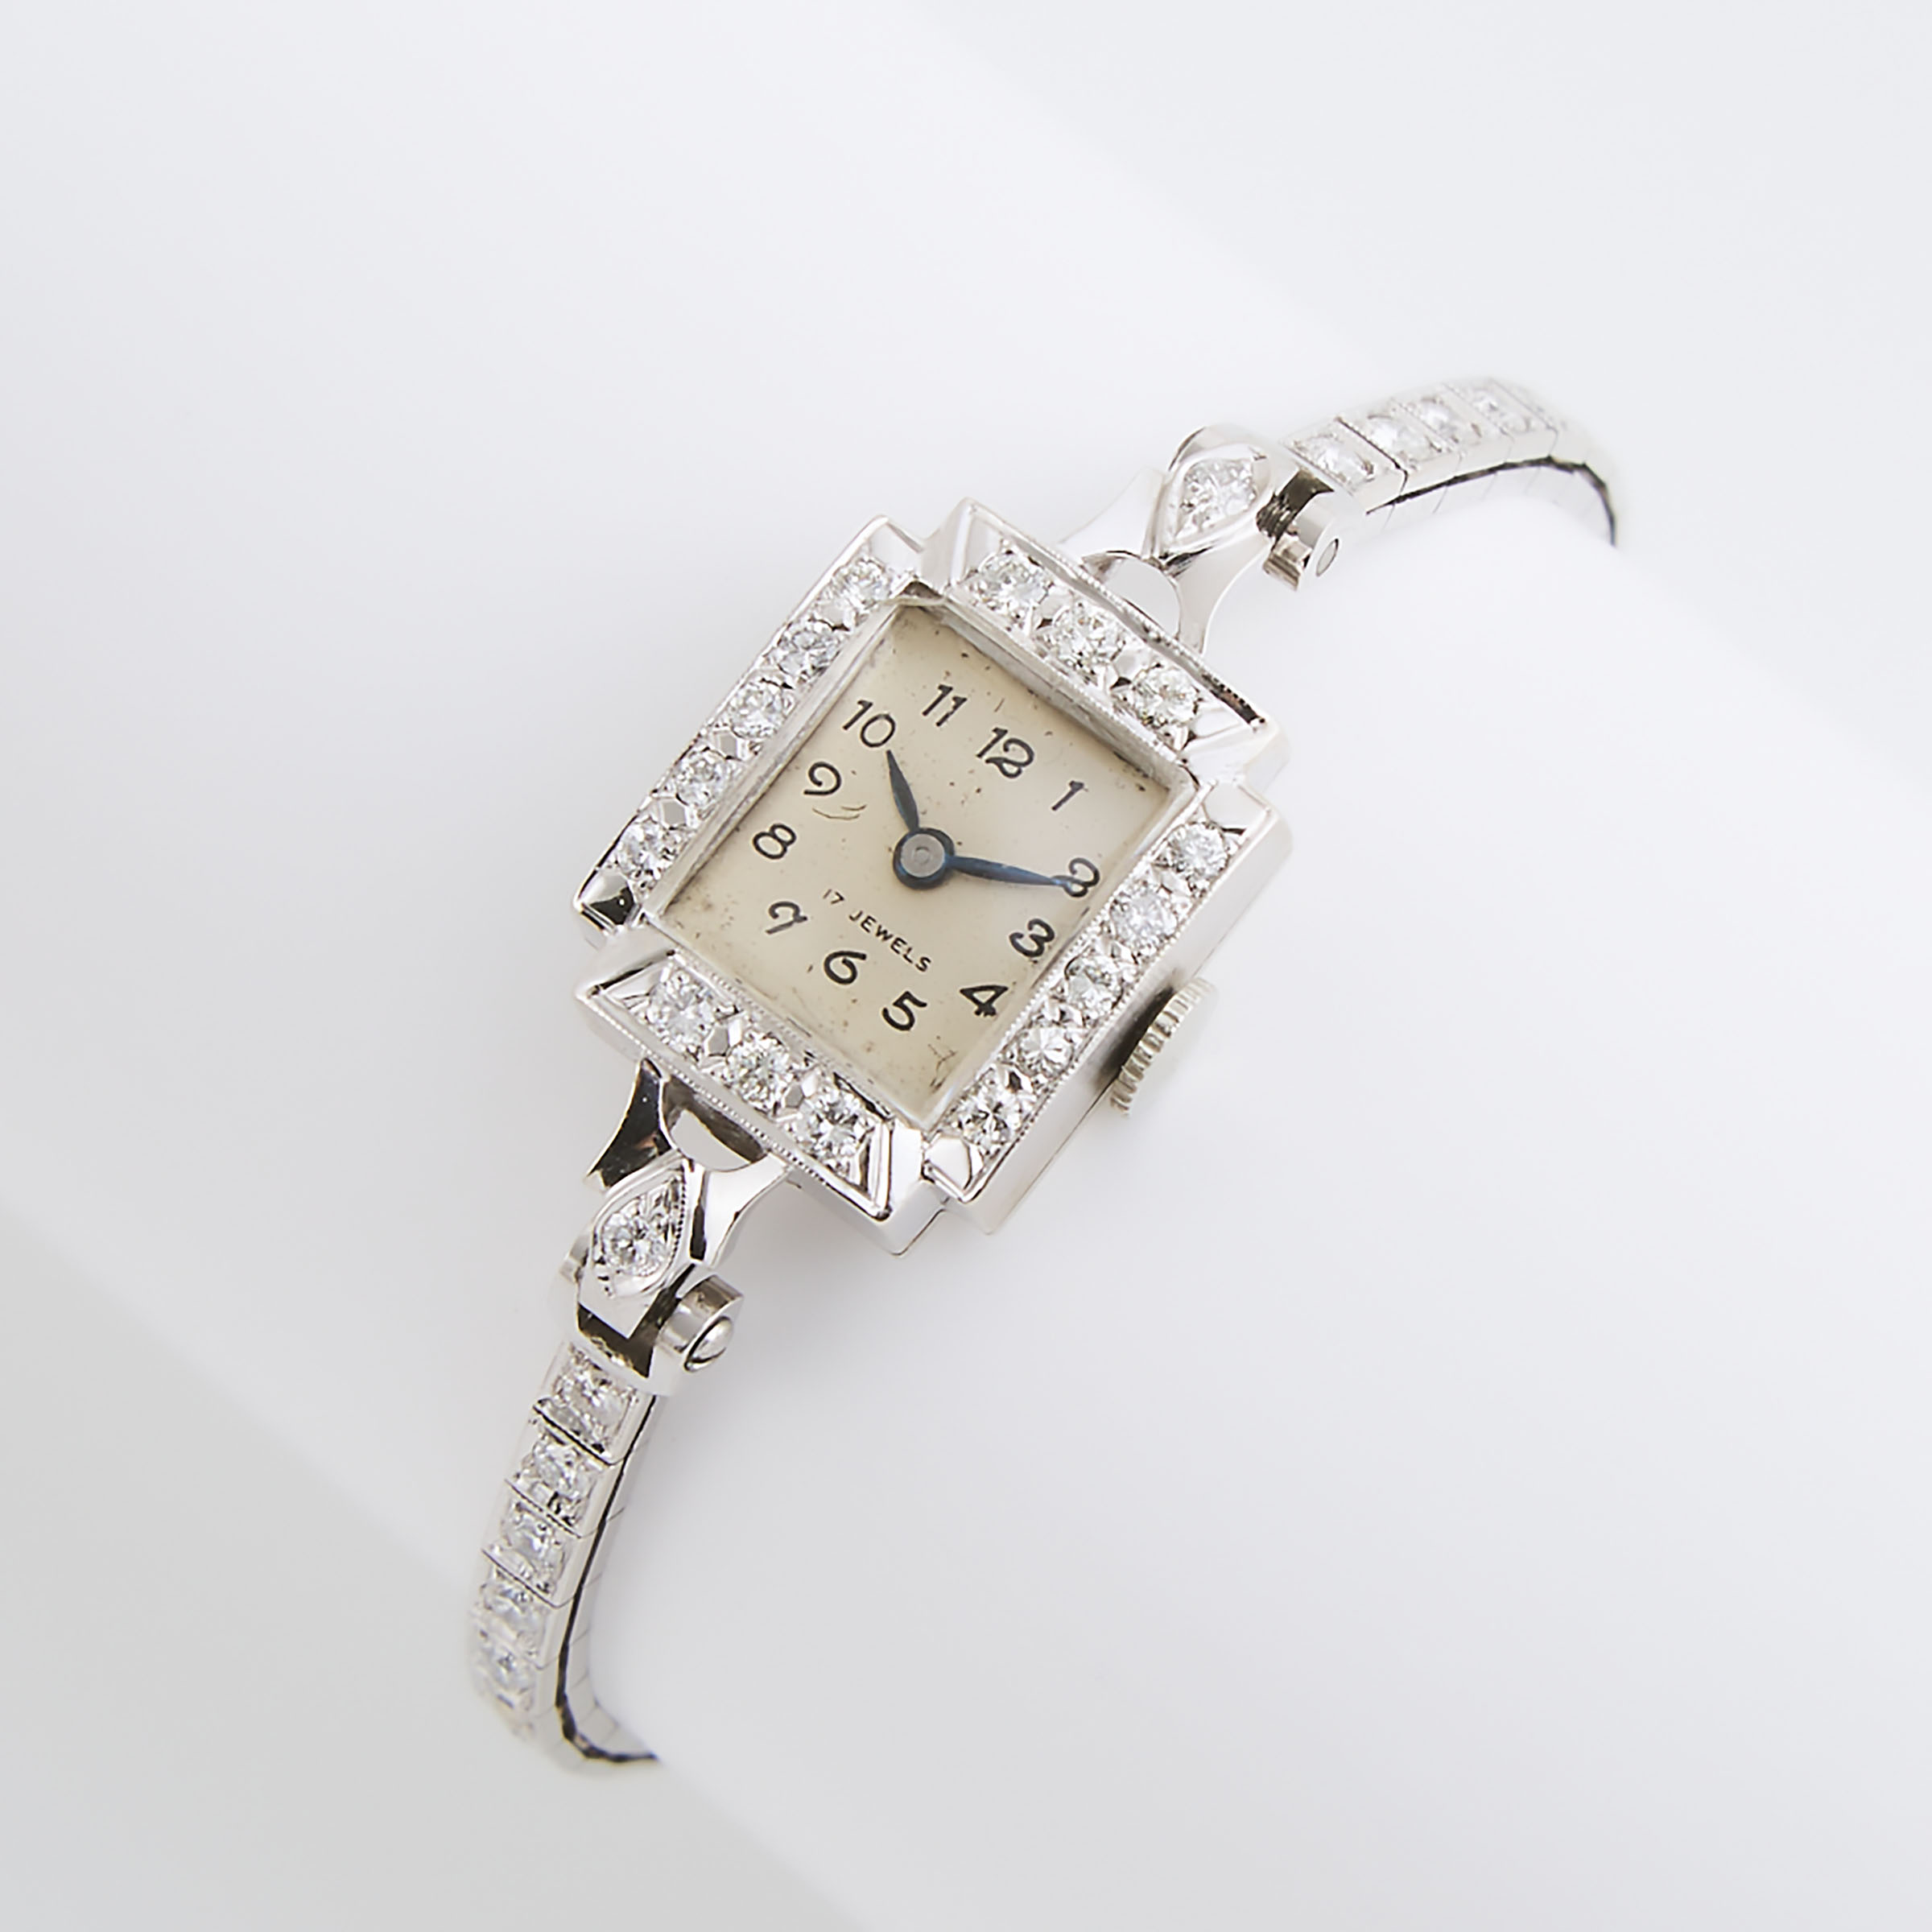 Lady's Dreffa Watch Co. Wristwatch